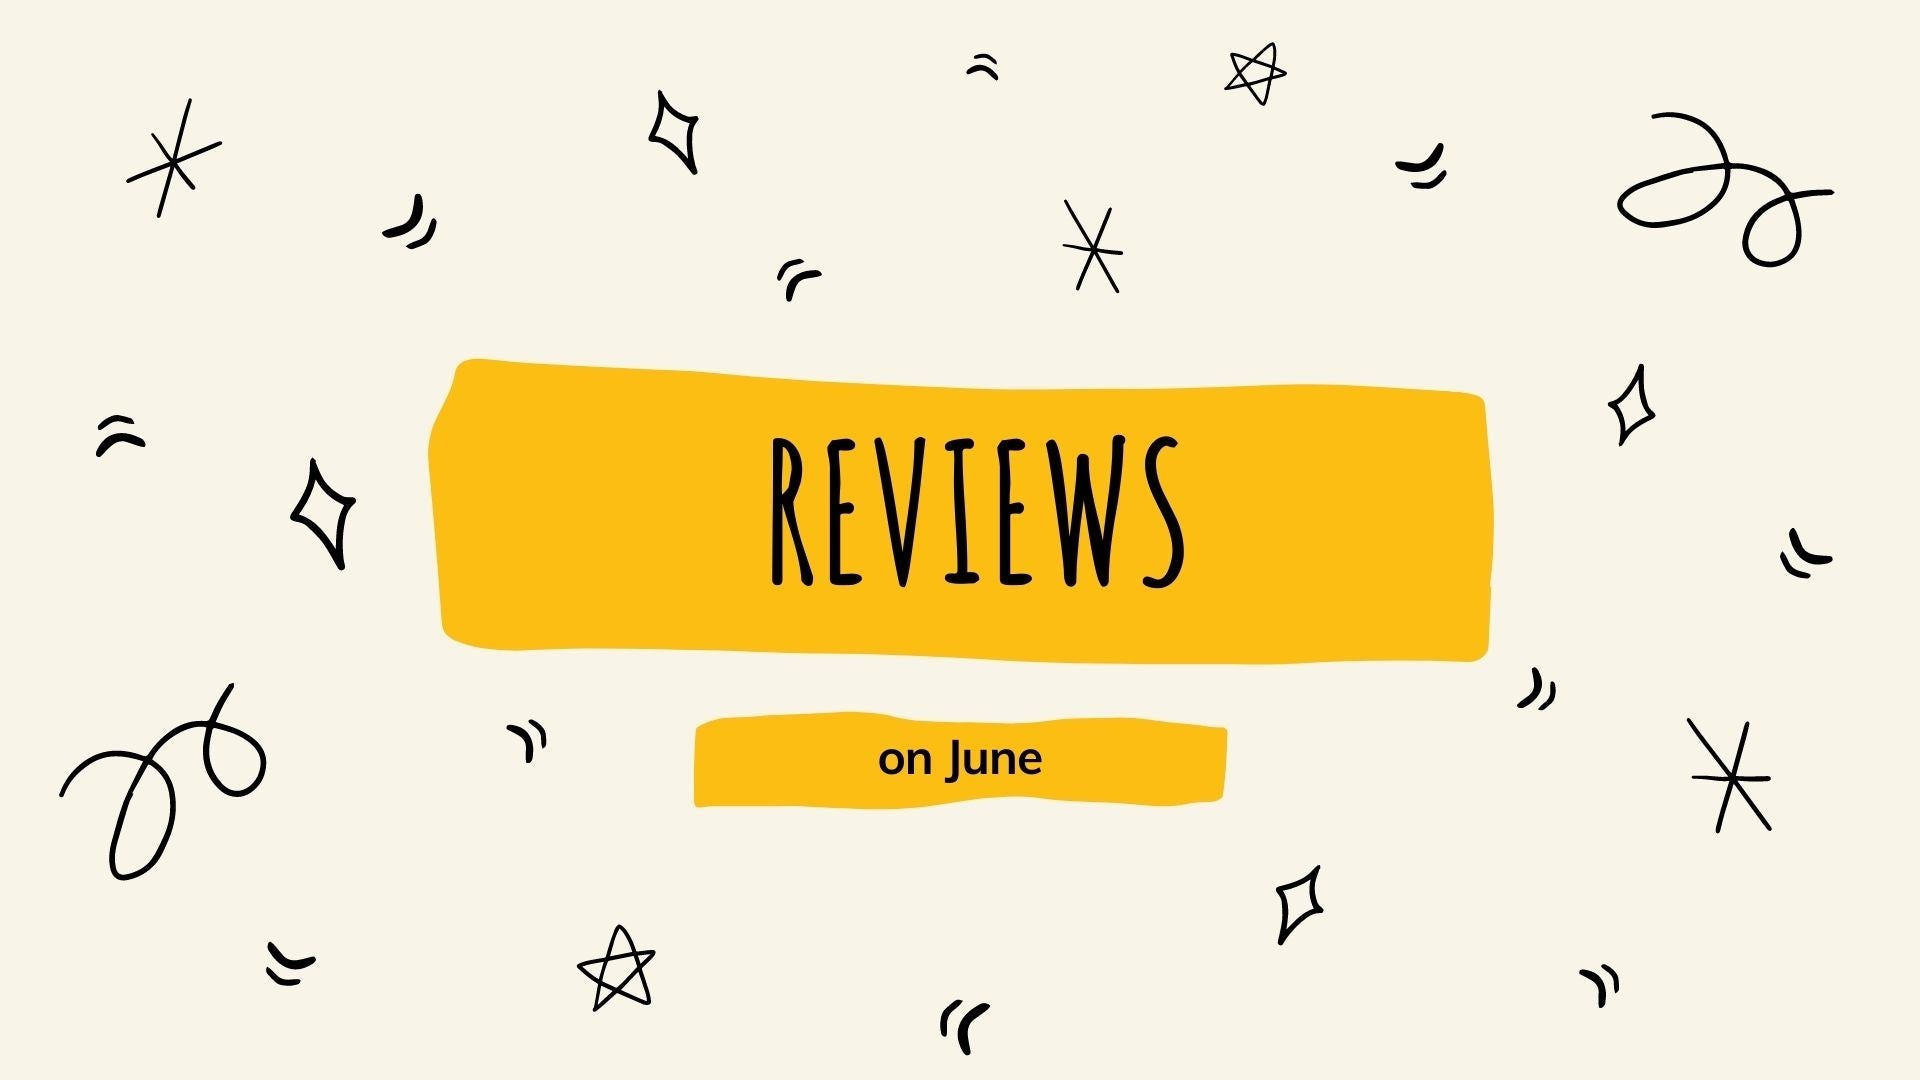 Latest Customer Reviews on June